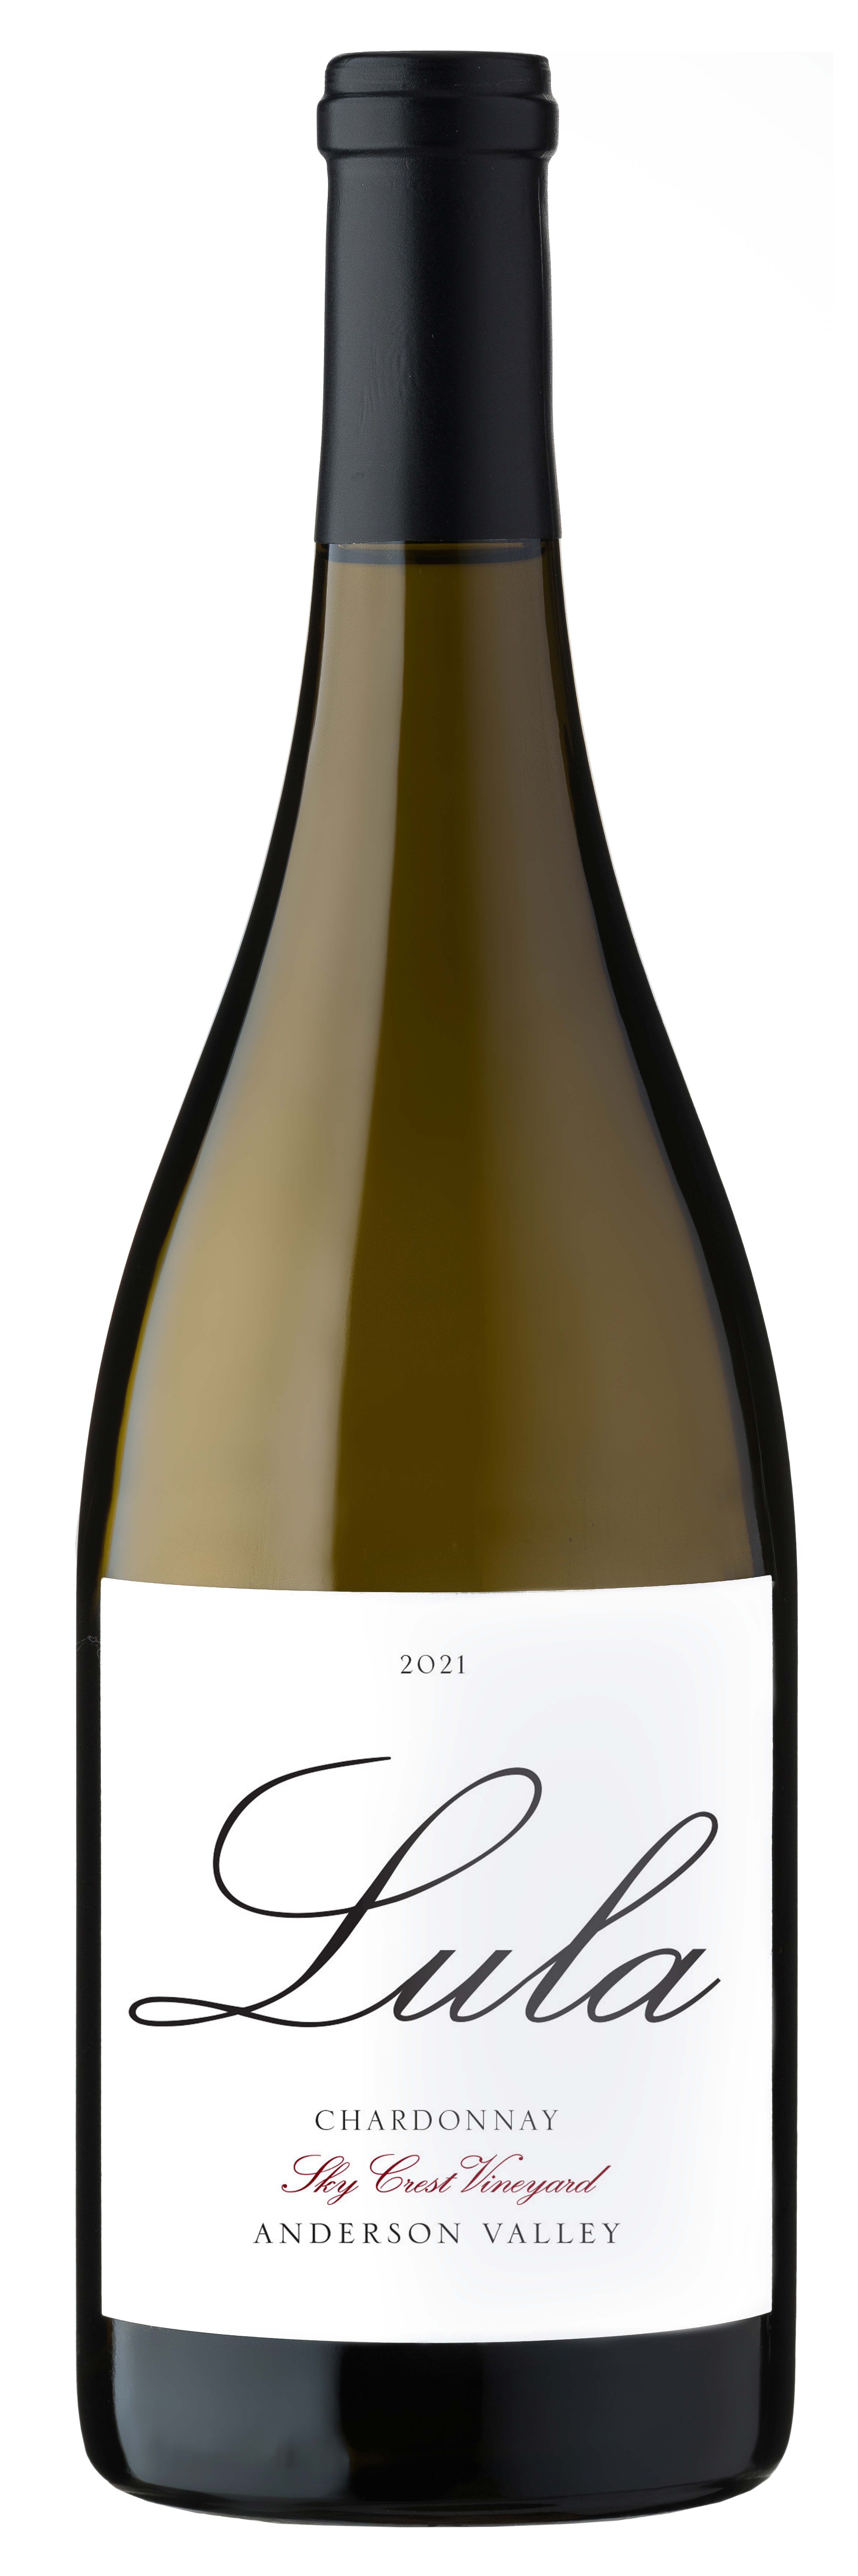 Product Image for 2021 Skycrest Vineyard Chardonnay